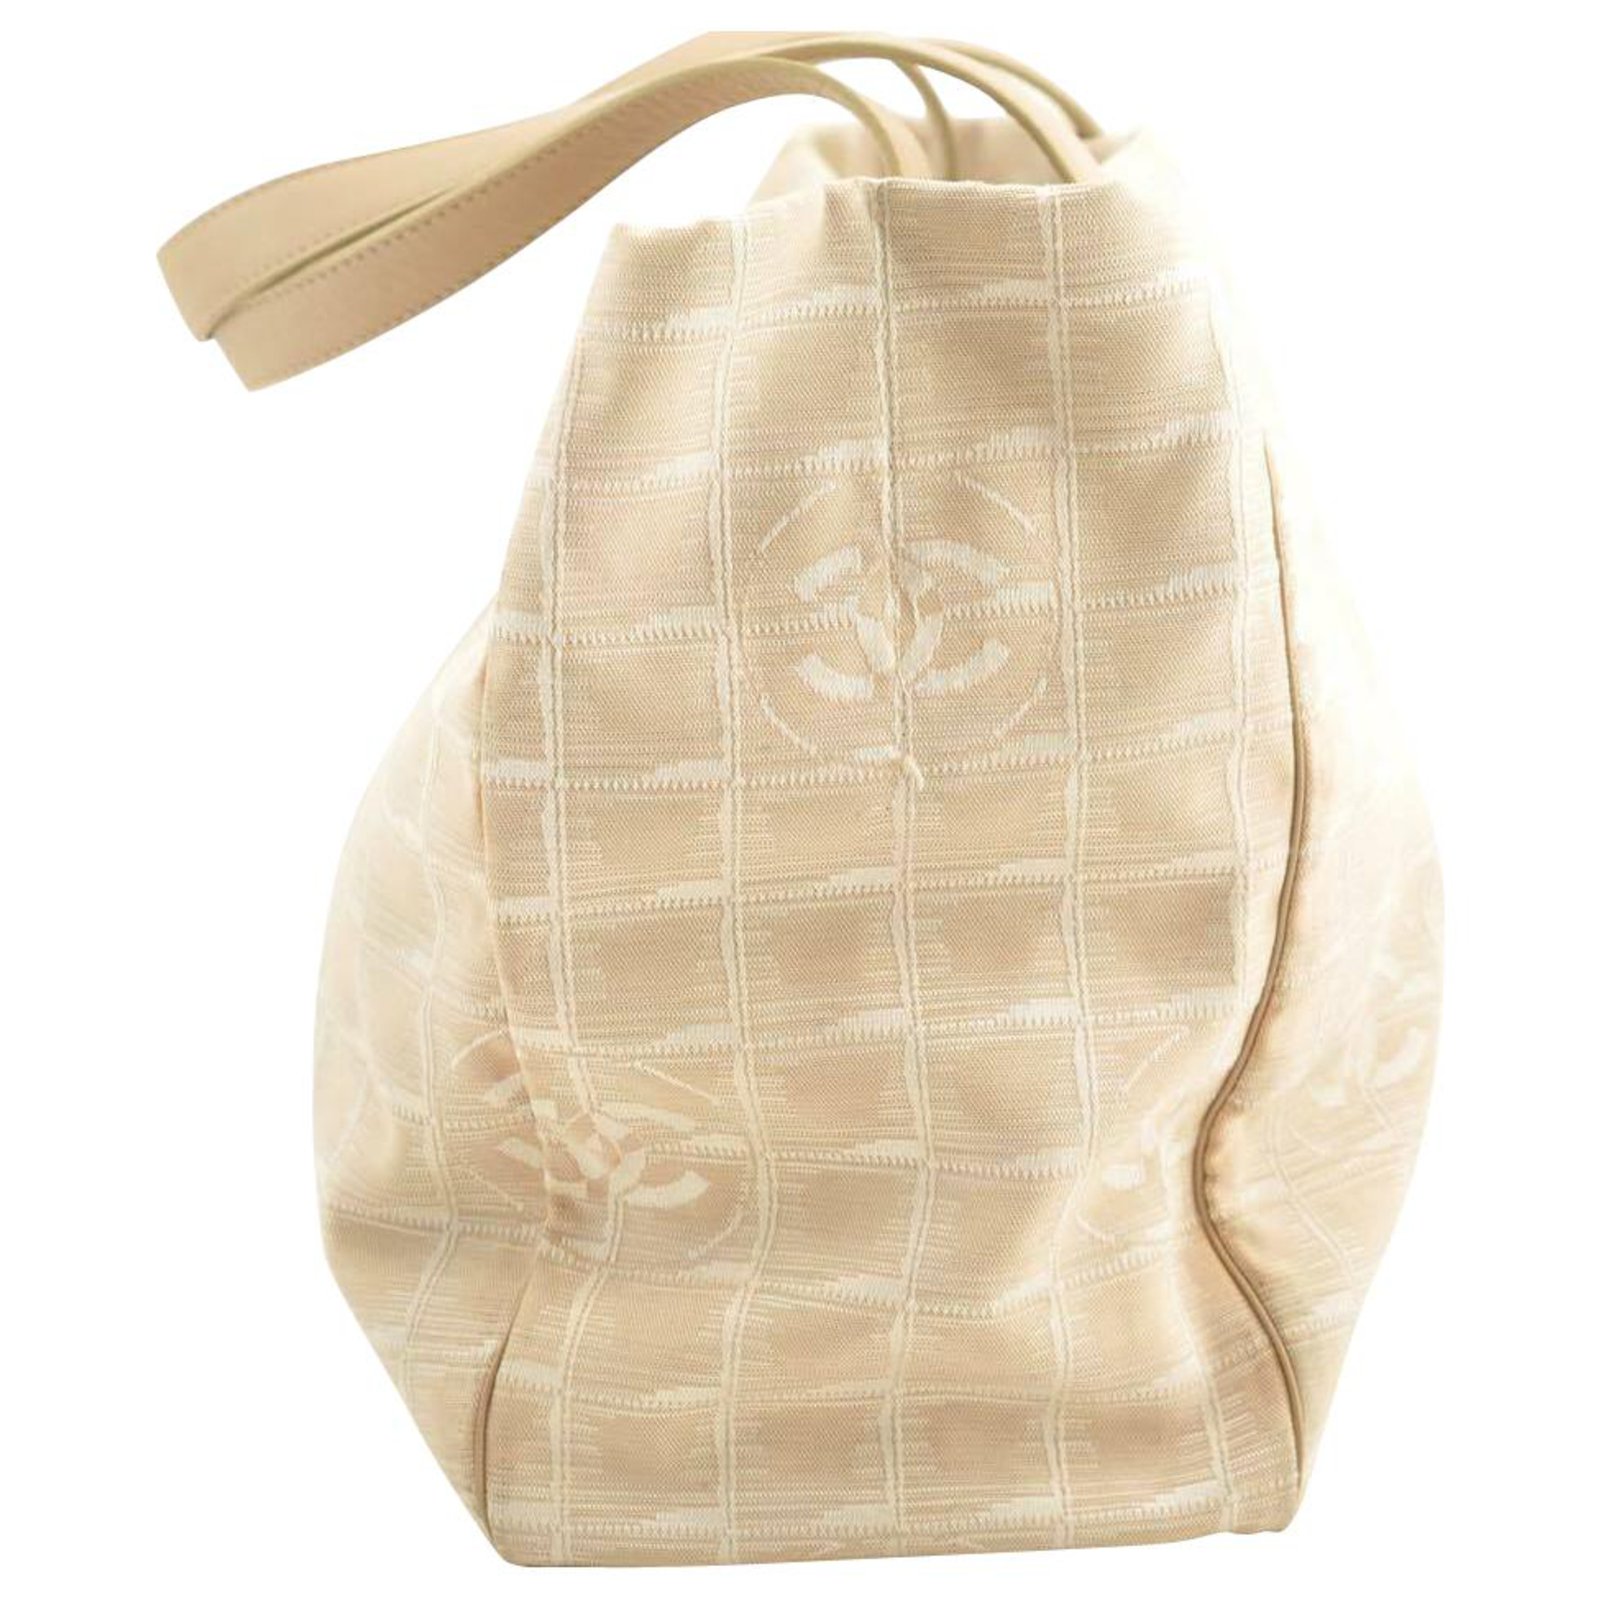 Chanel Travel line tote bag